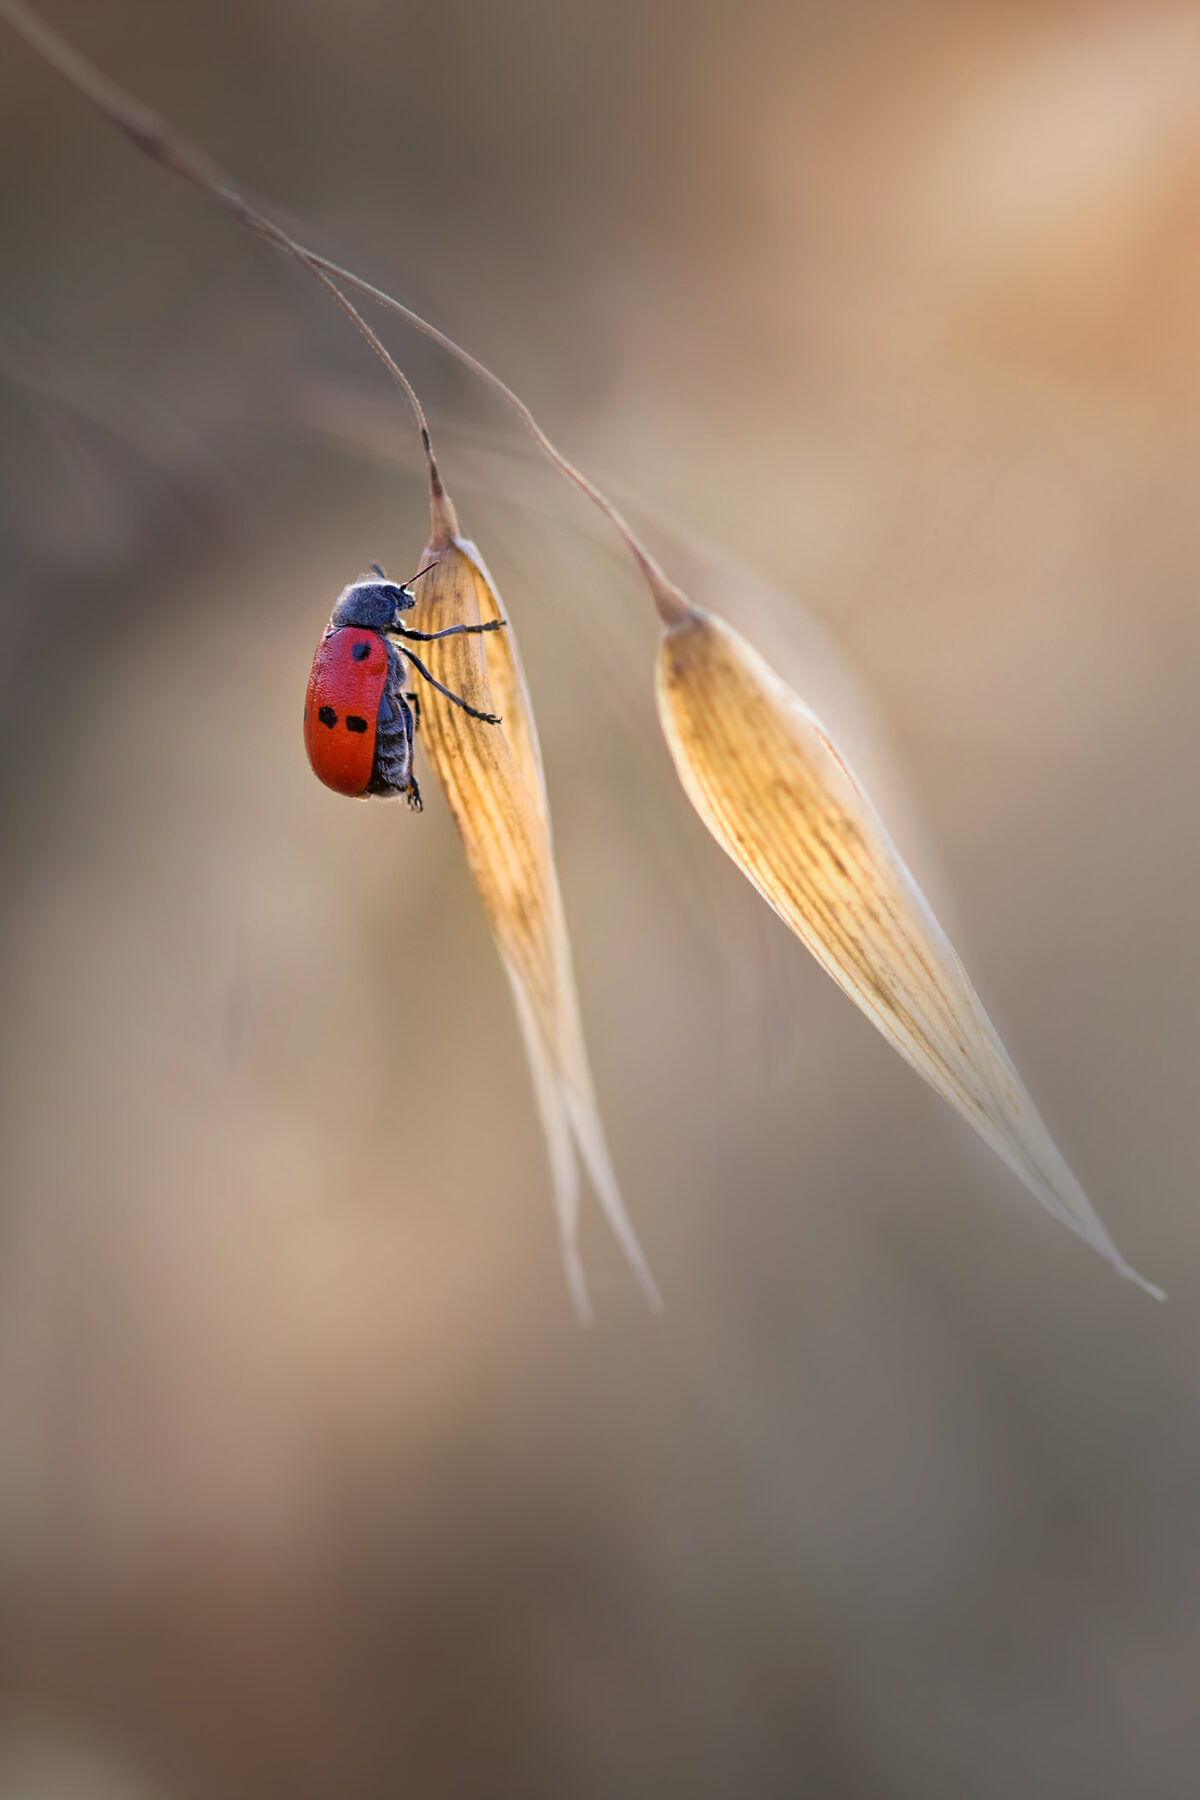 Fascinating Insect Photography Series By Maria Luisa Milla Moreno (3)